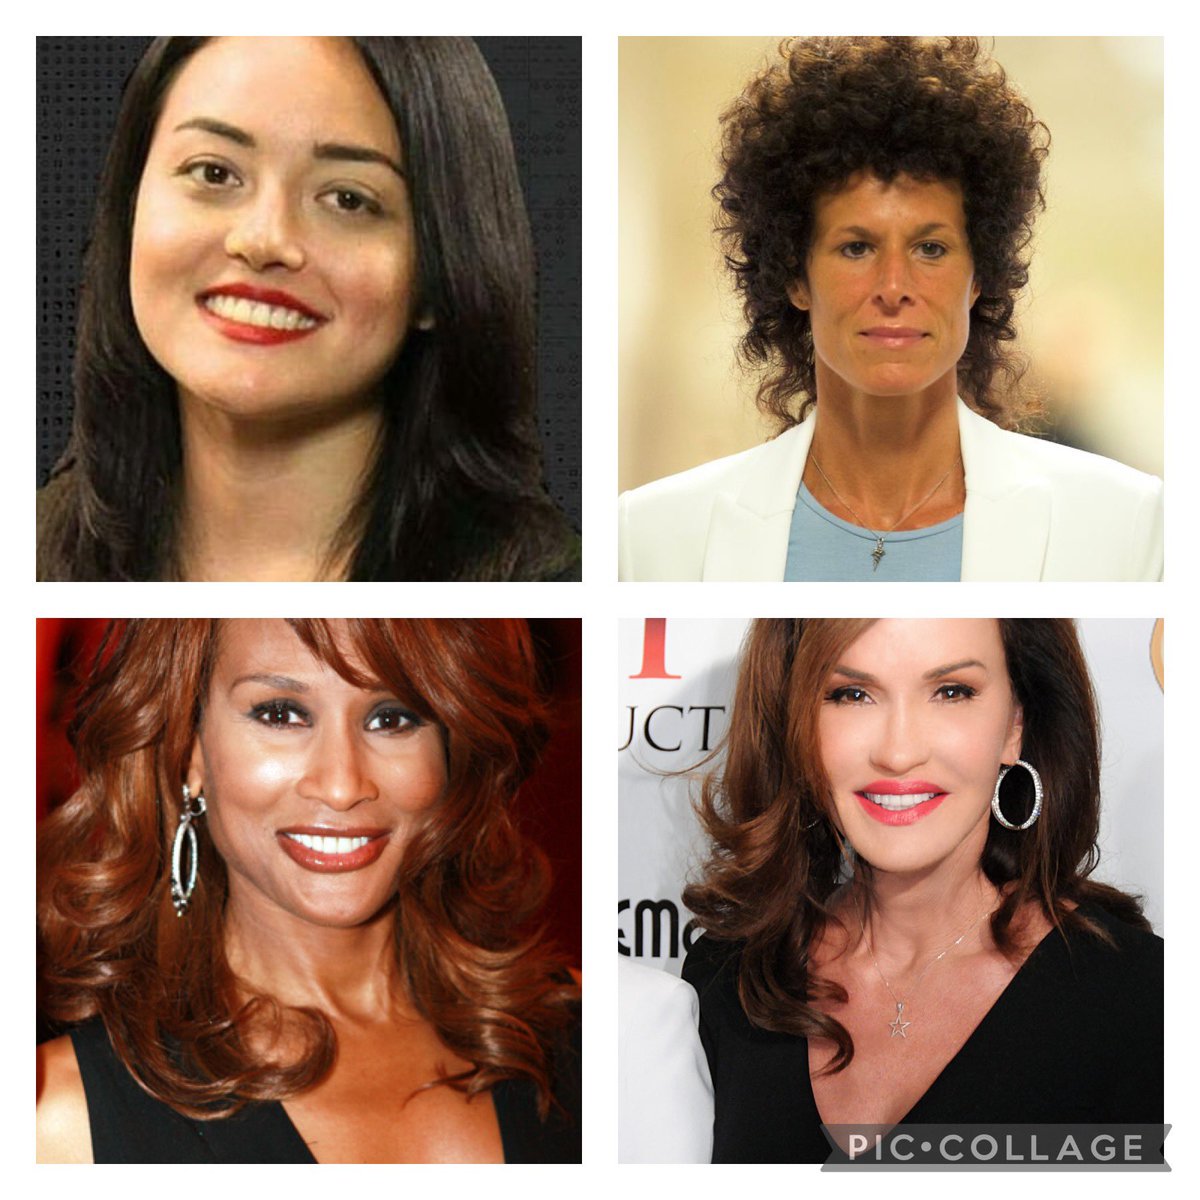 8 Famous Women Who Are Liars:

1. #AmberHeard
2. #SSSniperWolf
3. #Woffee
4. #DenieceCornejo
5. #KatAlano
6. #AndreaConstand
7. #BeverlyJohnson
8. #JaniceDickinson

#womenareliarstoo #womencanlietoo #falseaccusationsisabuse #factsdontliepeopledo